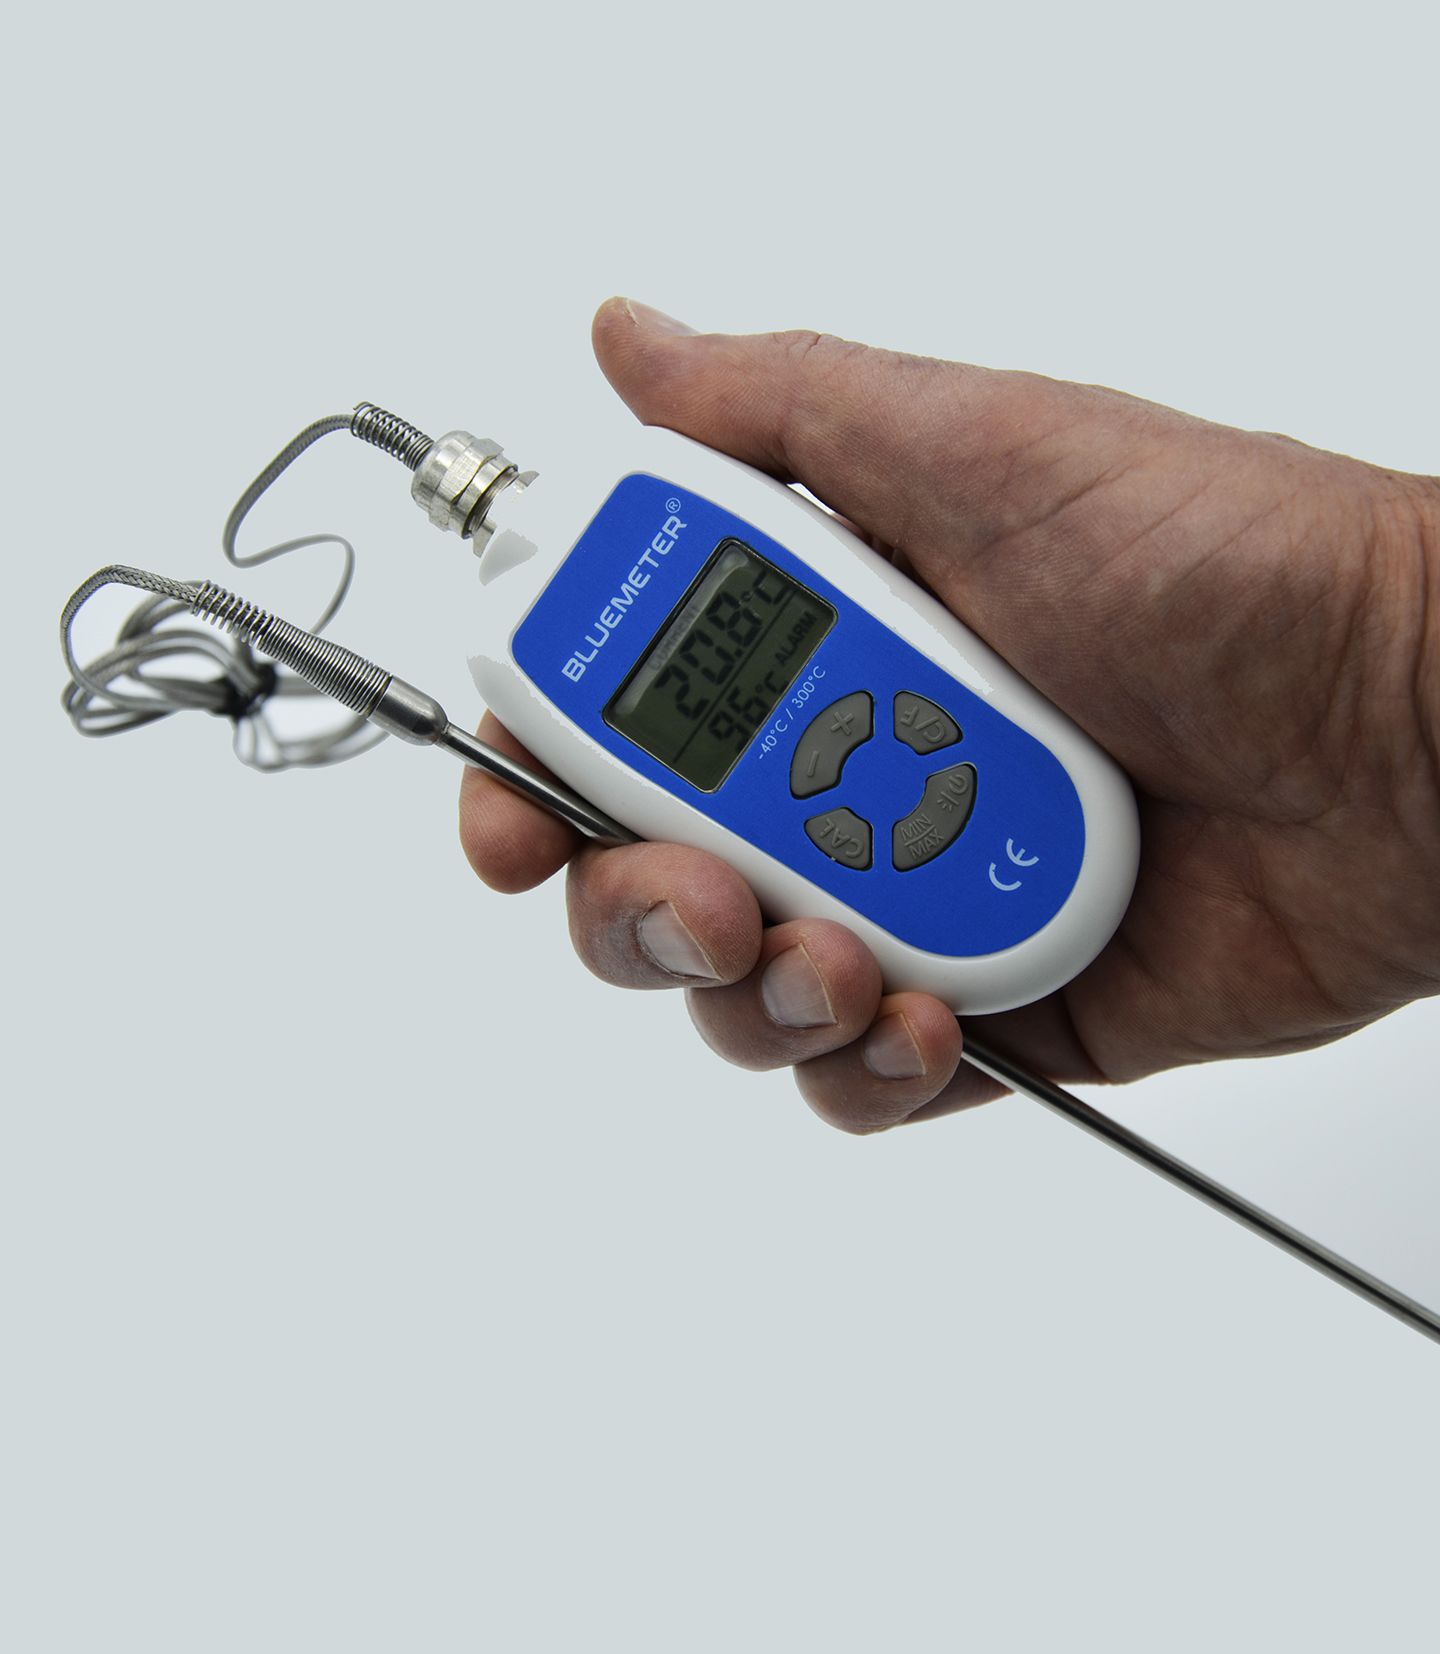 Thermomètre avec sonde déportée TXC - Orthos Comptage